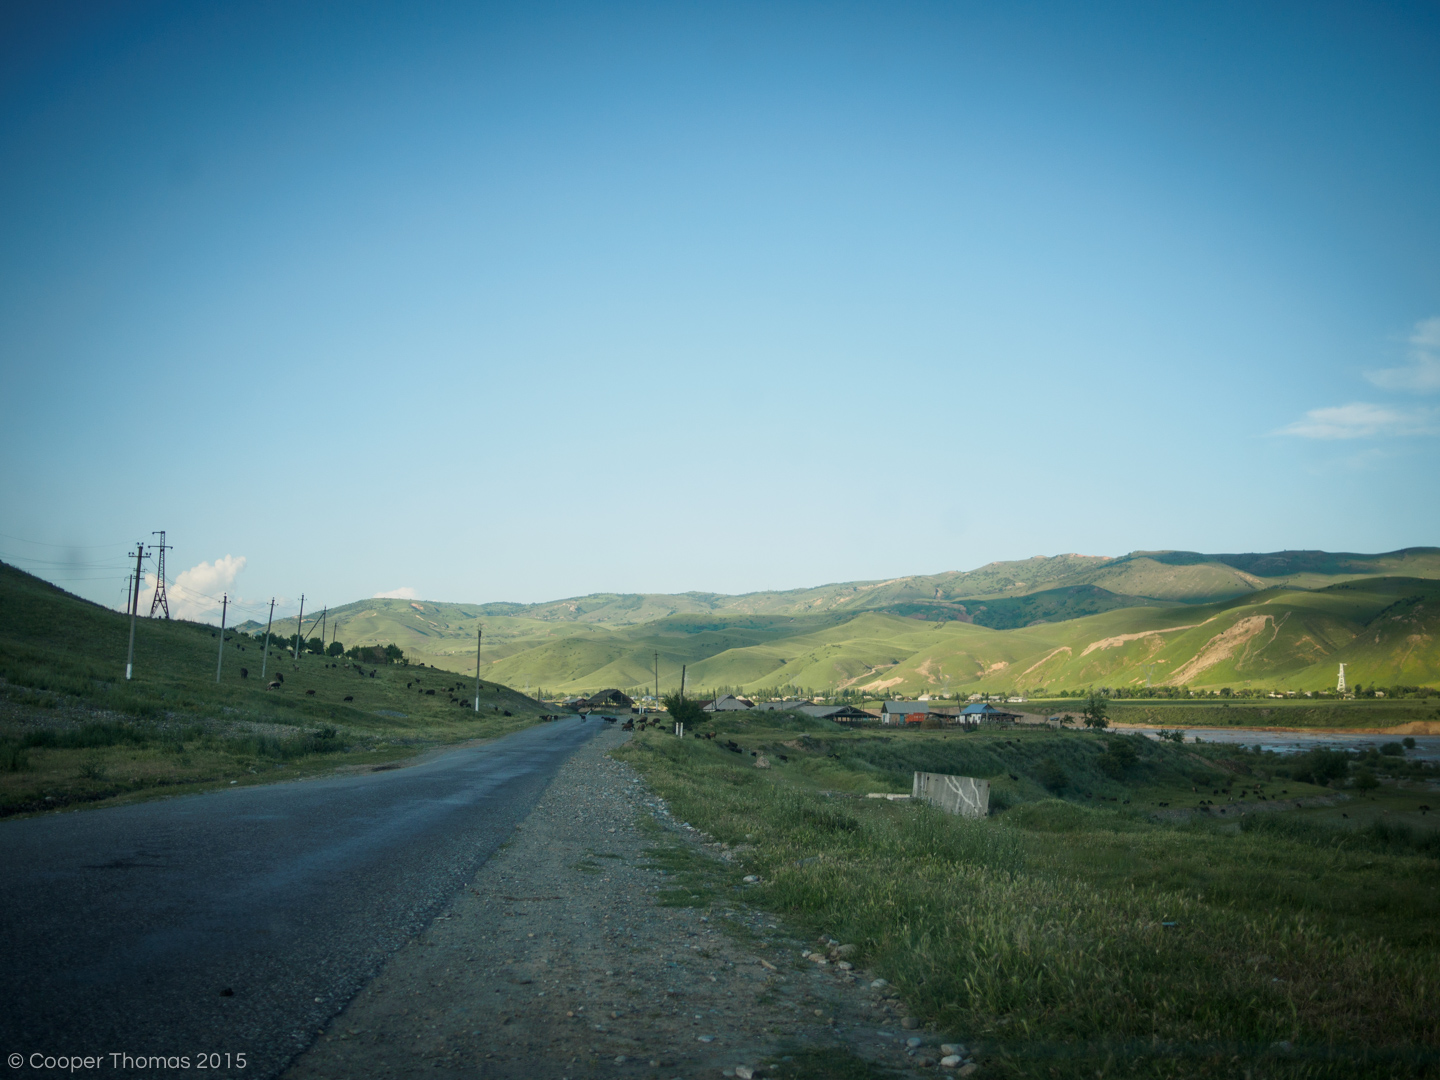 Hills and herds near Arslanbob